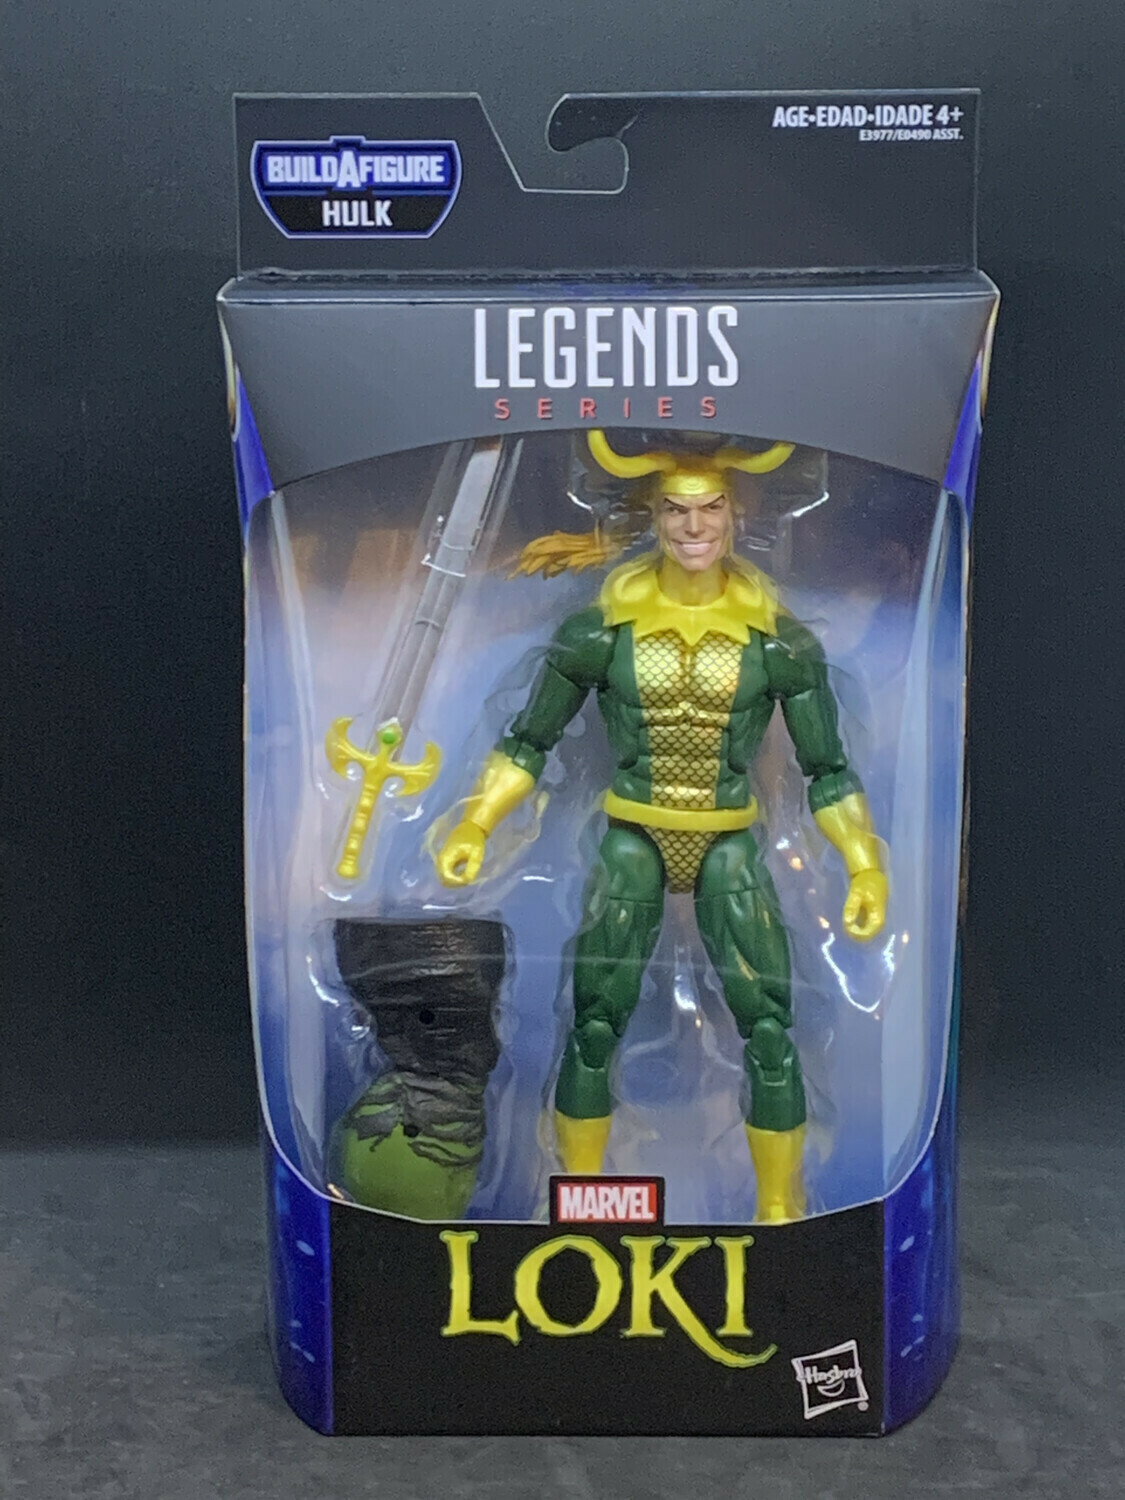 Loki HULK BAF Marvel Legends 6" Avengers Endgame Wave 2 